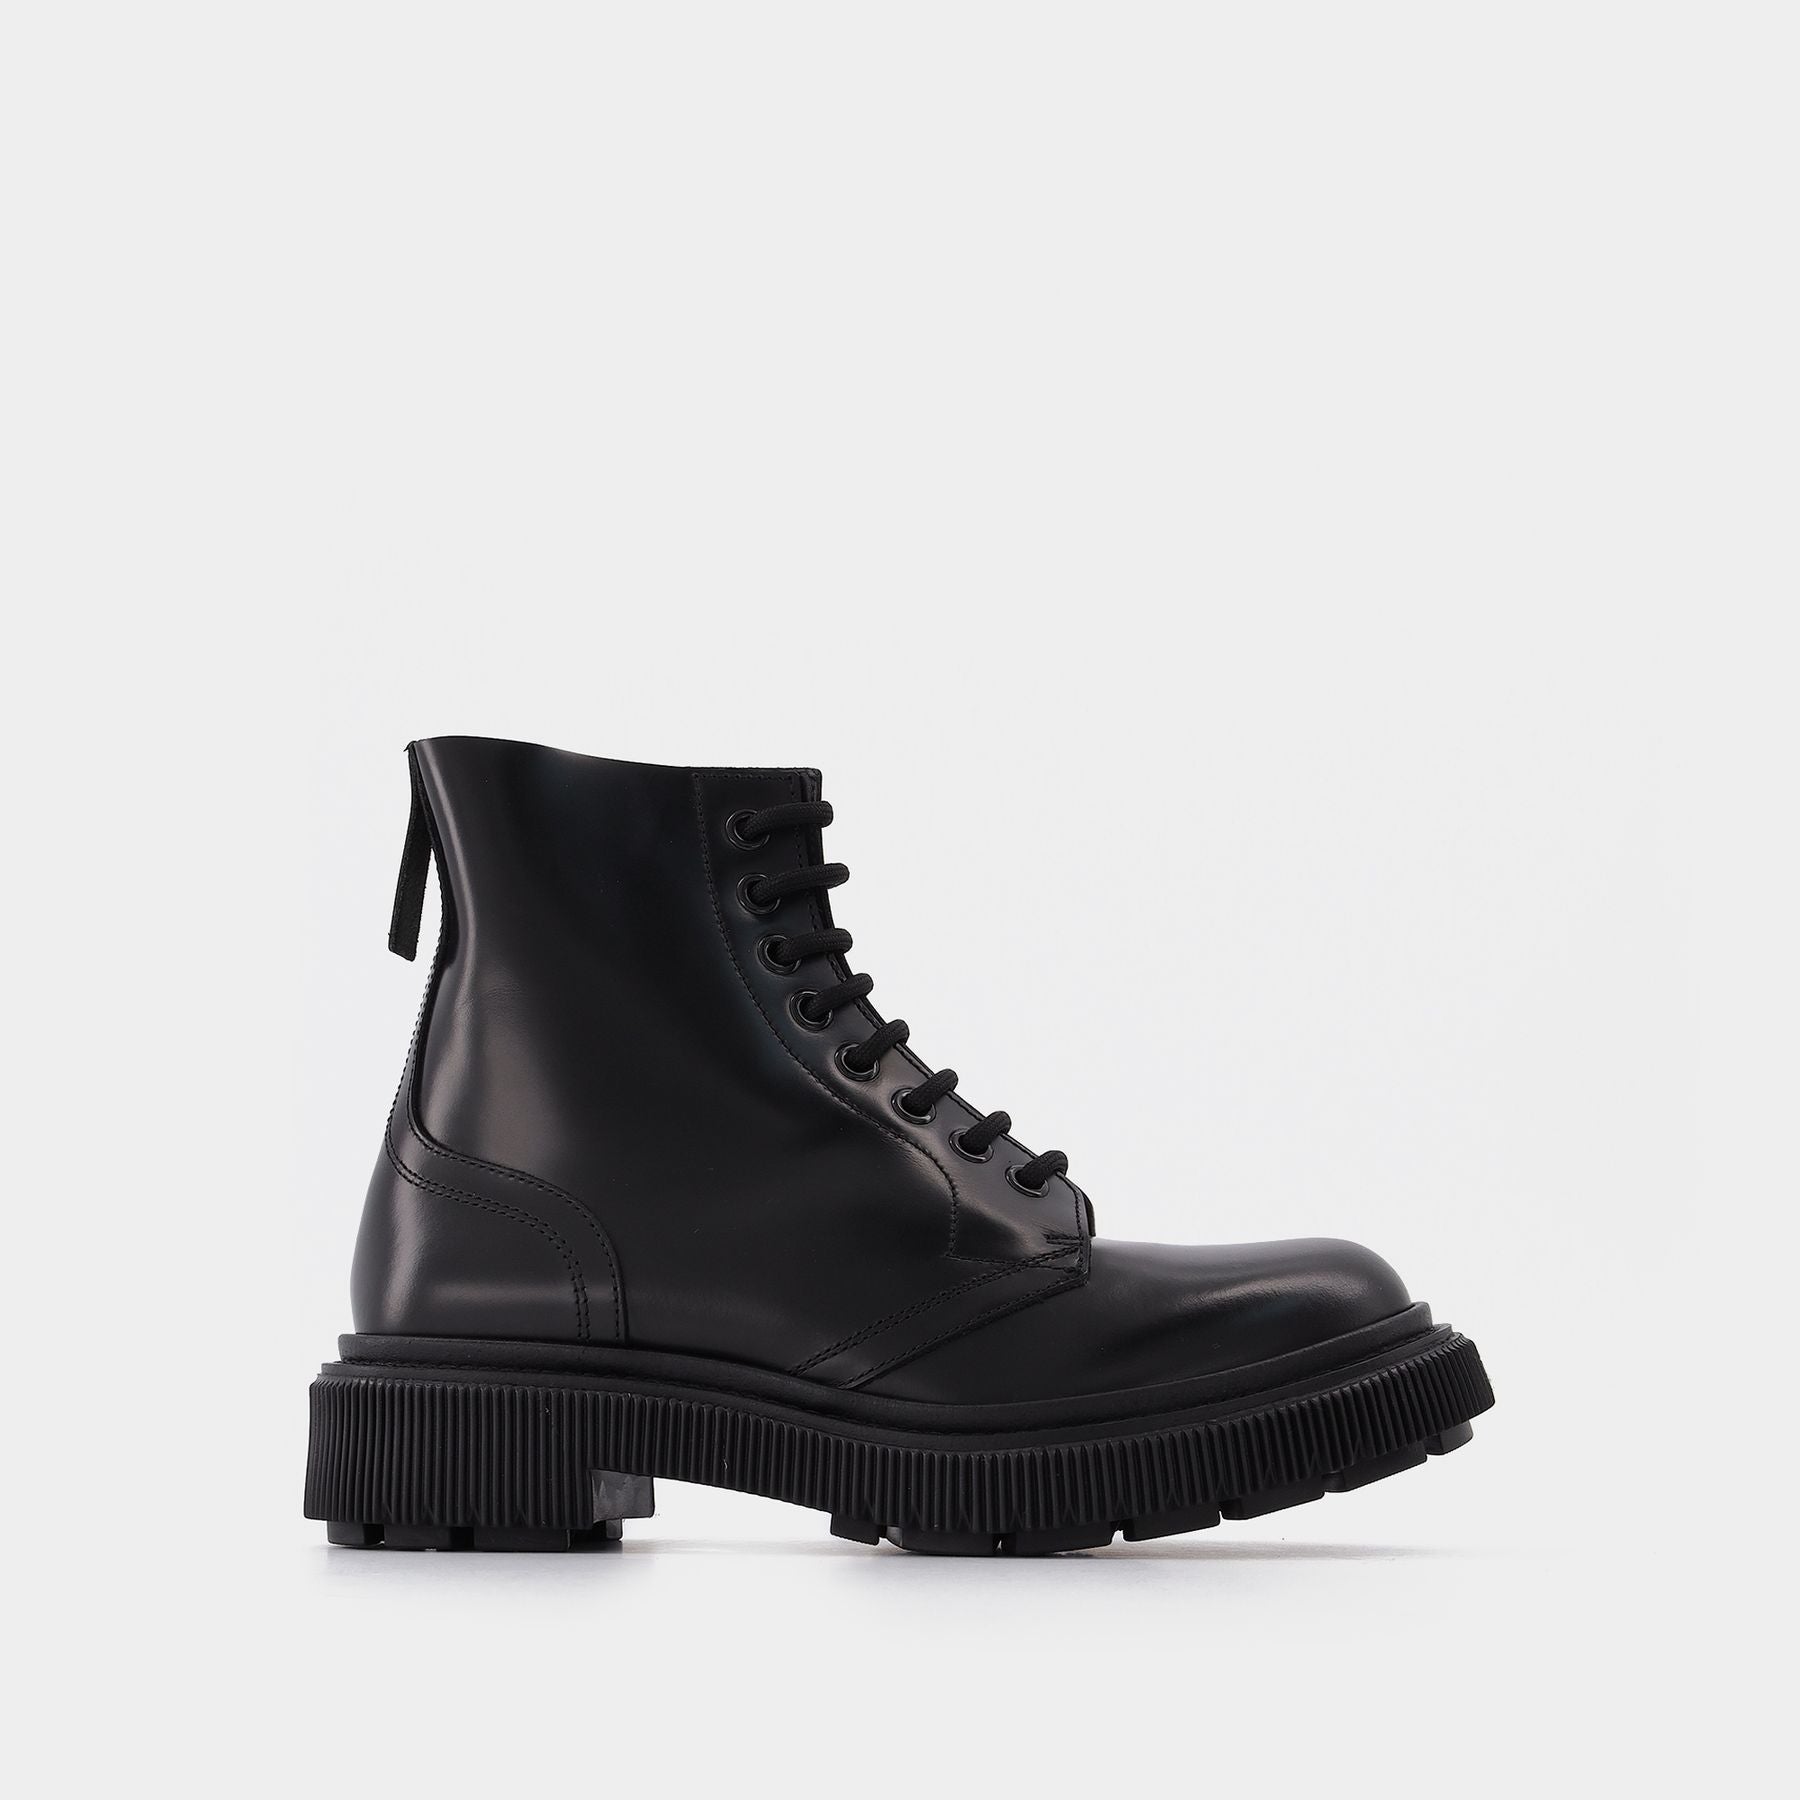 Adieu Paris Typ 165 leather military boots - Black